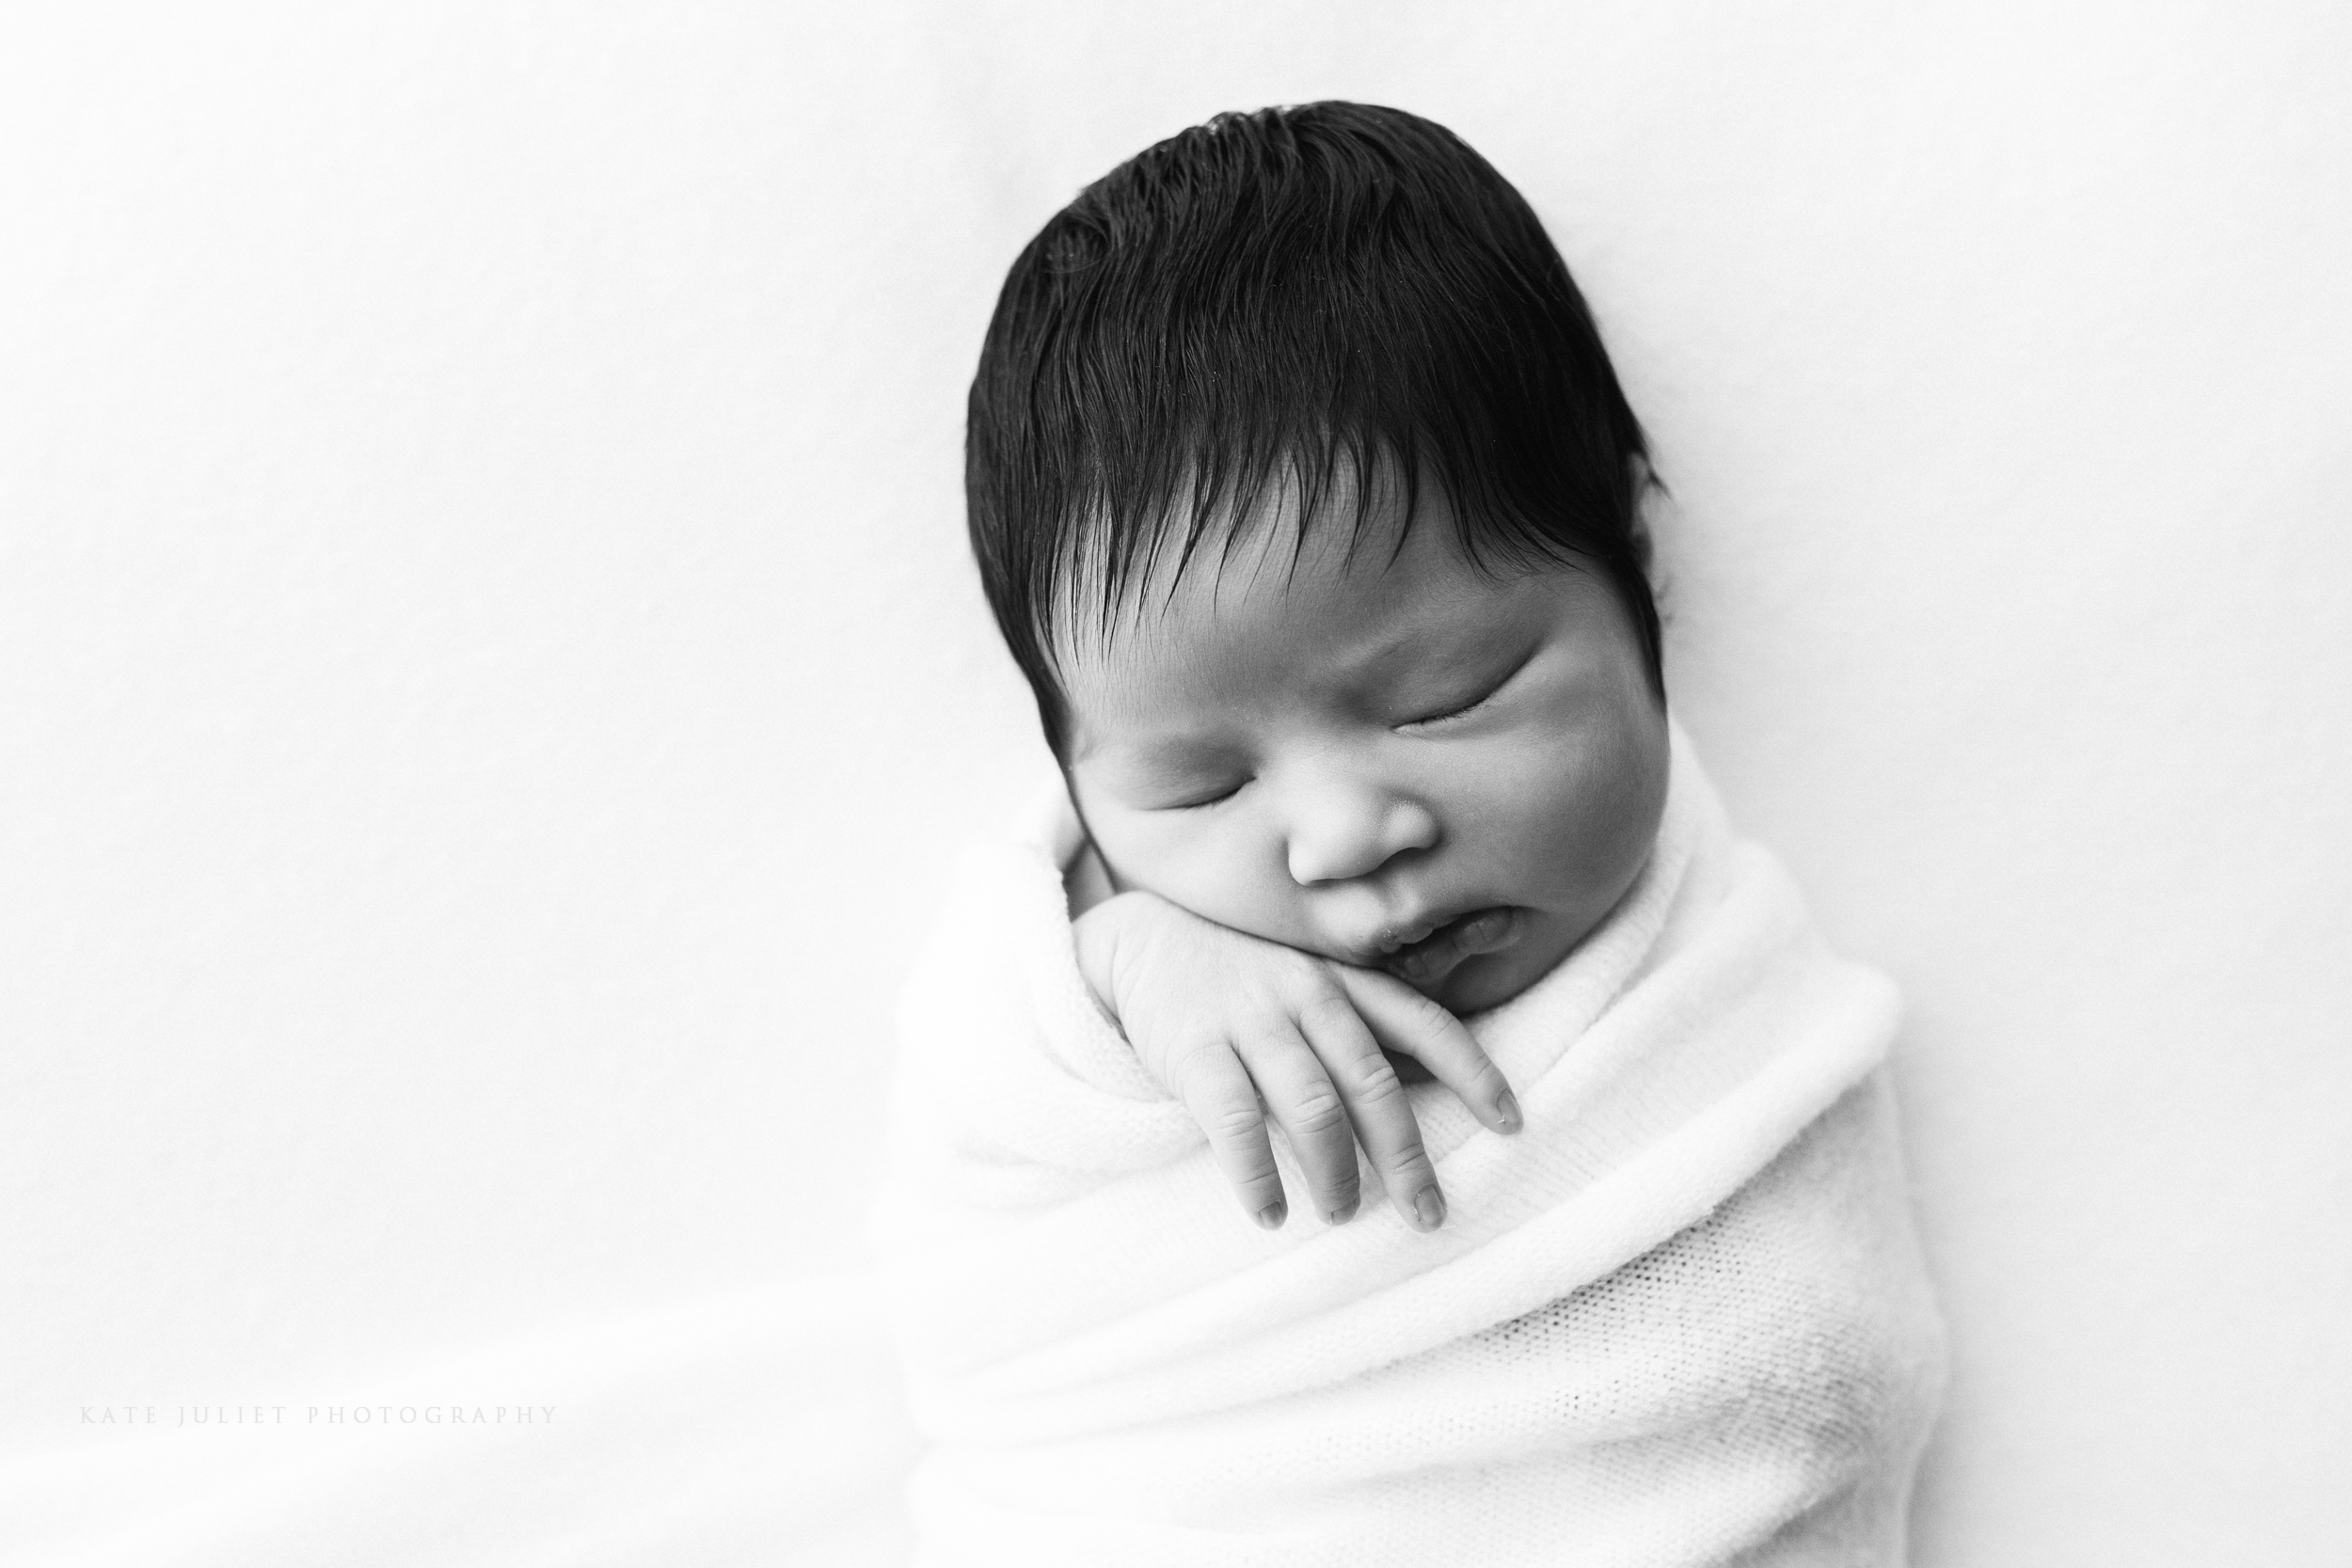 Fairfax County VA Baby Photographer | Kate Juliet Photography